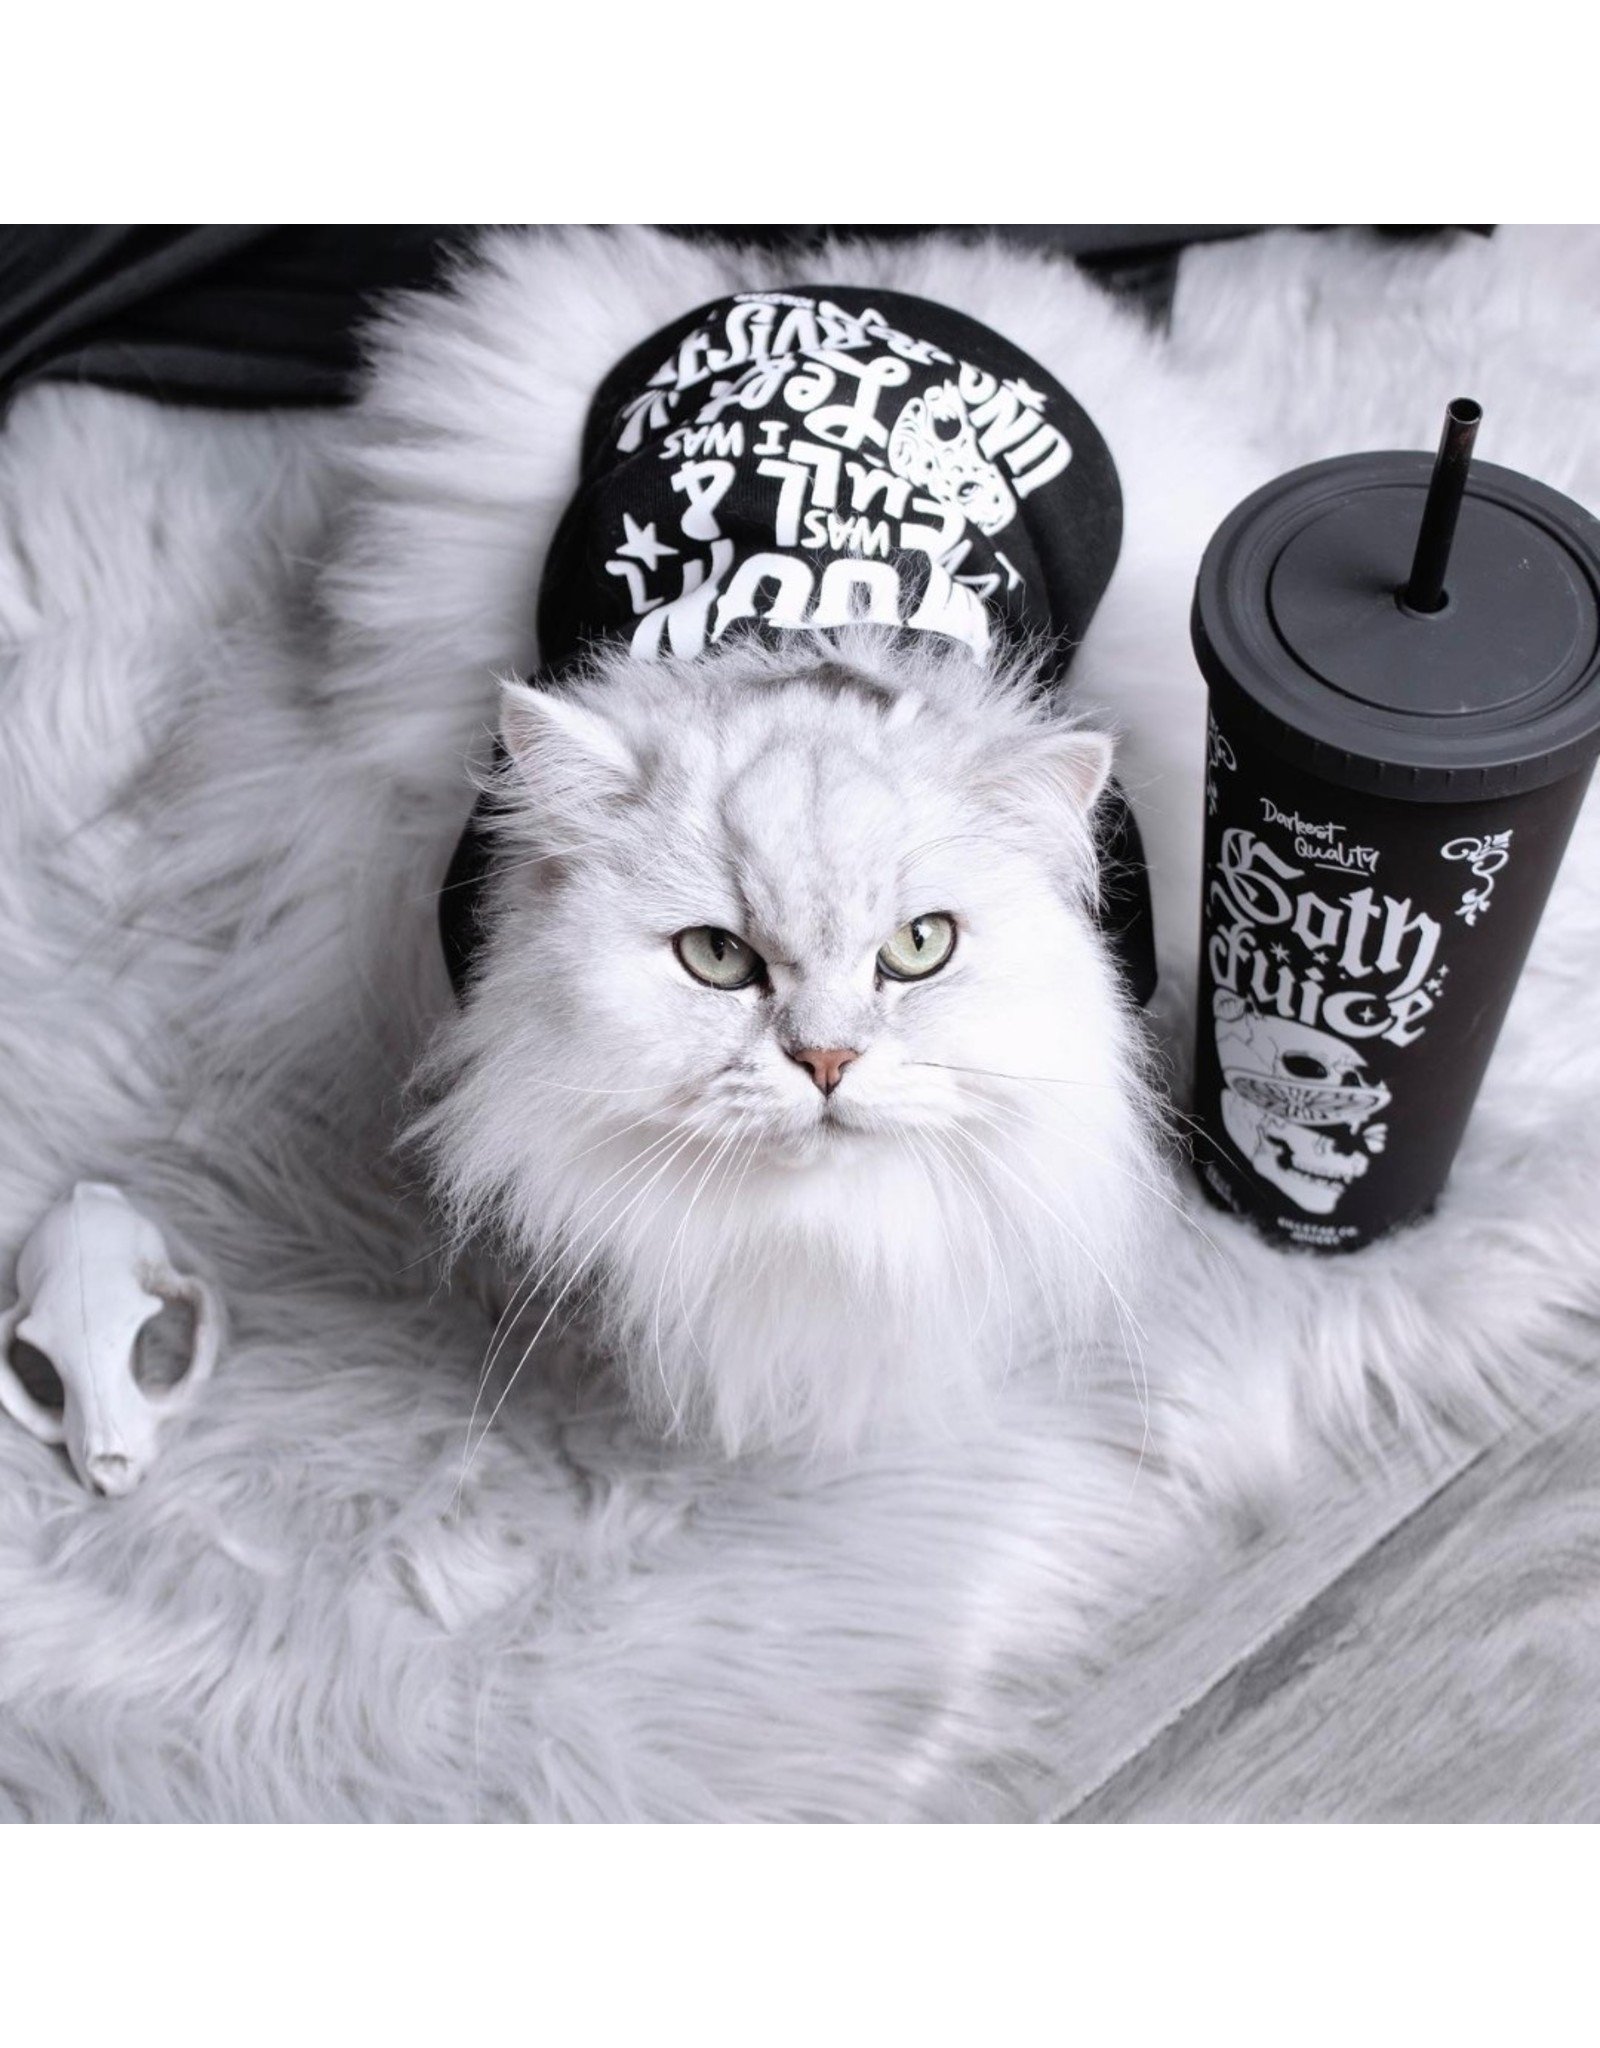 Killstar Goth Juice Cold Brew Punk Witchy Coffee Mug Cup Tumbler KSRA001617